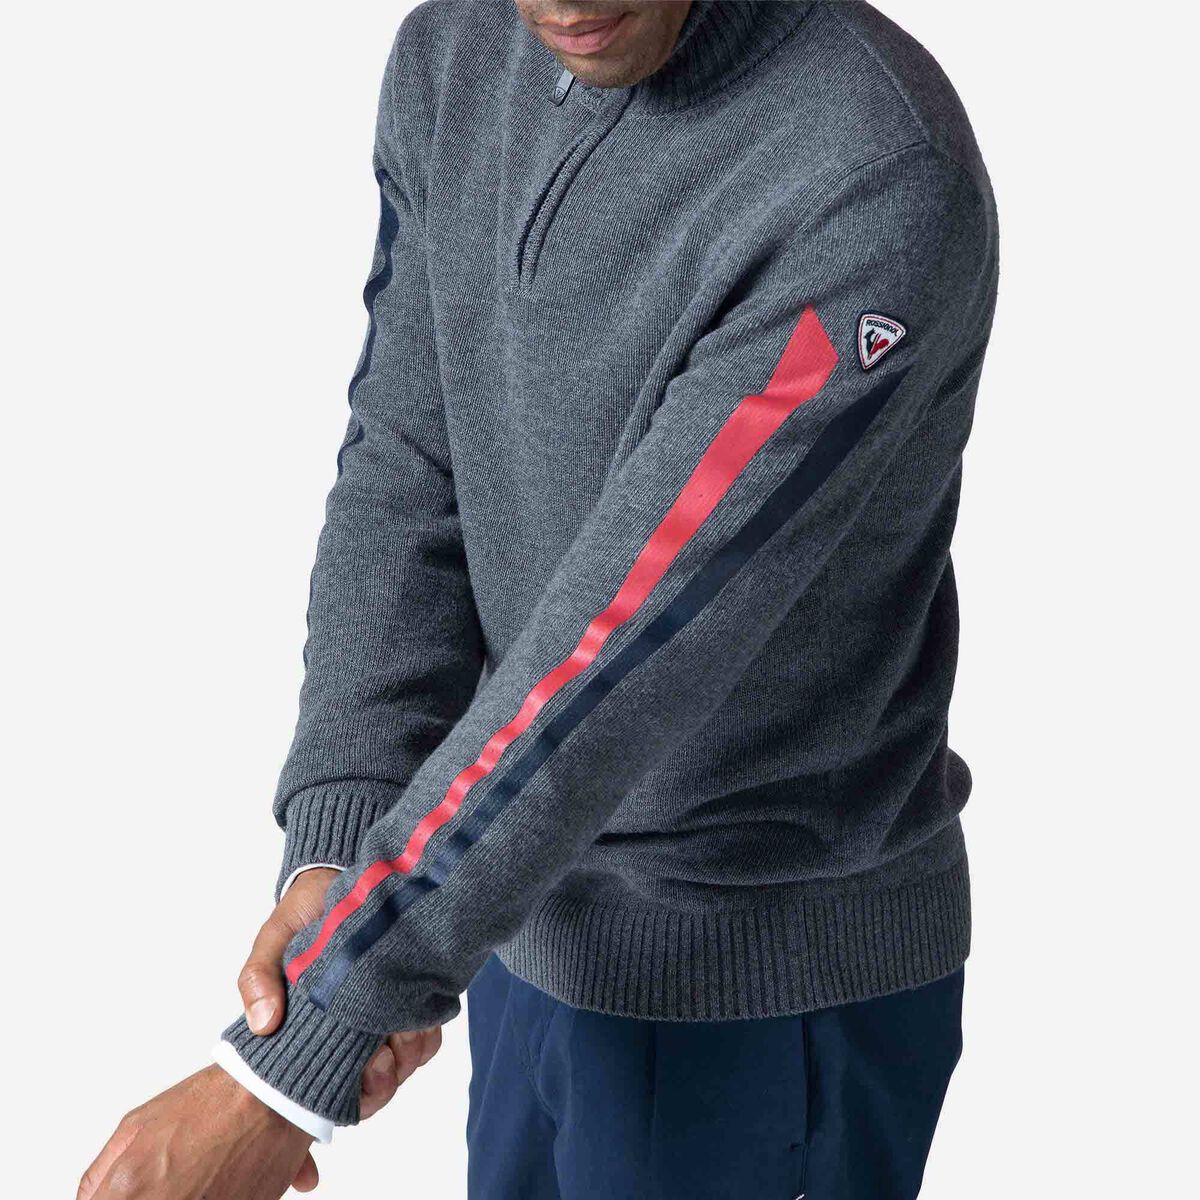 Men's Signature Sleeve Knit Sweater